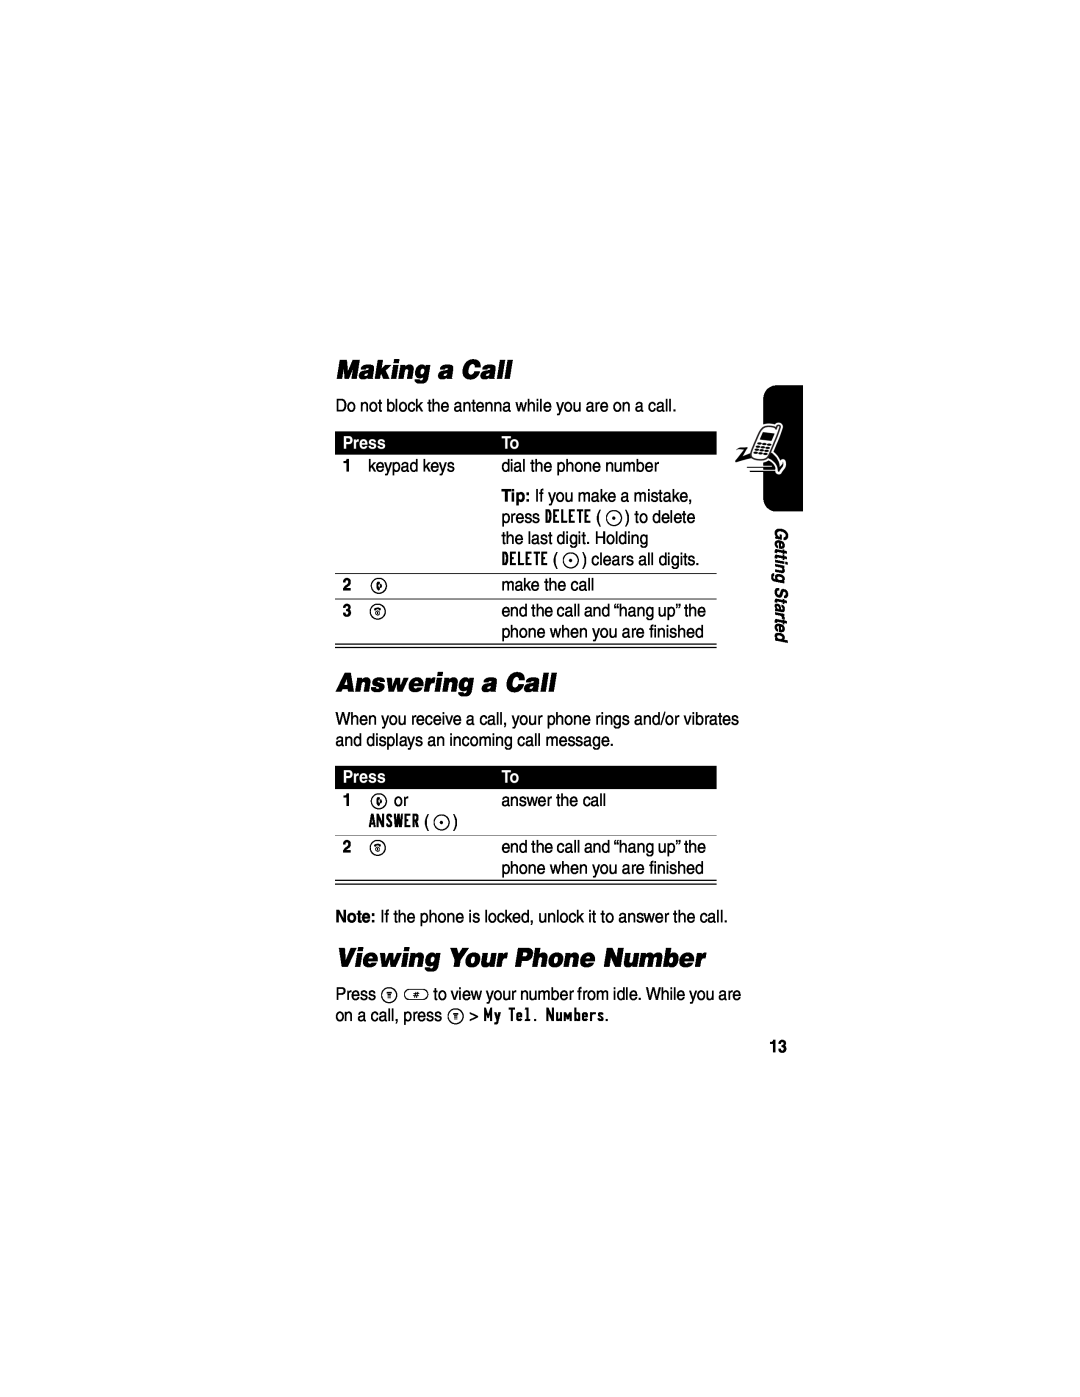 Motorola C341a, CDMA manual Making a Call, Answering a Call, Viewing Your Phone Number, Press 